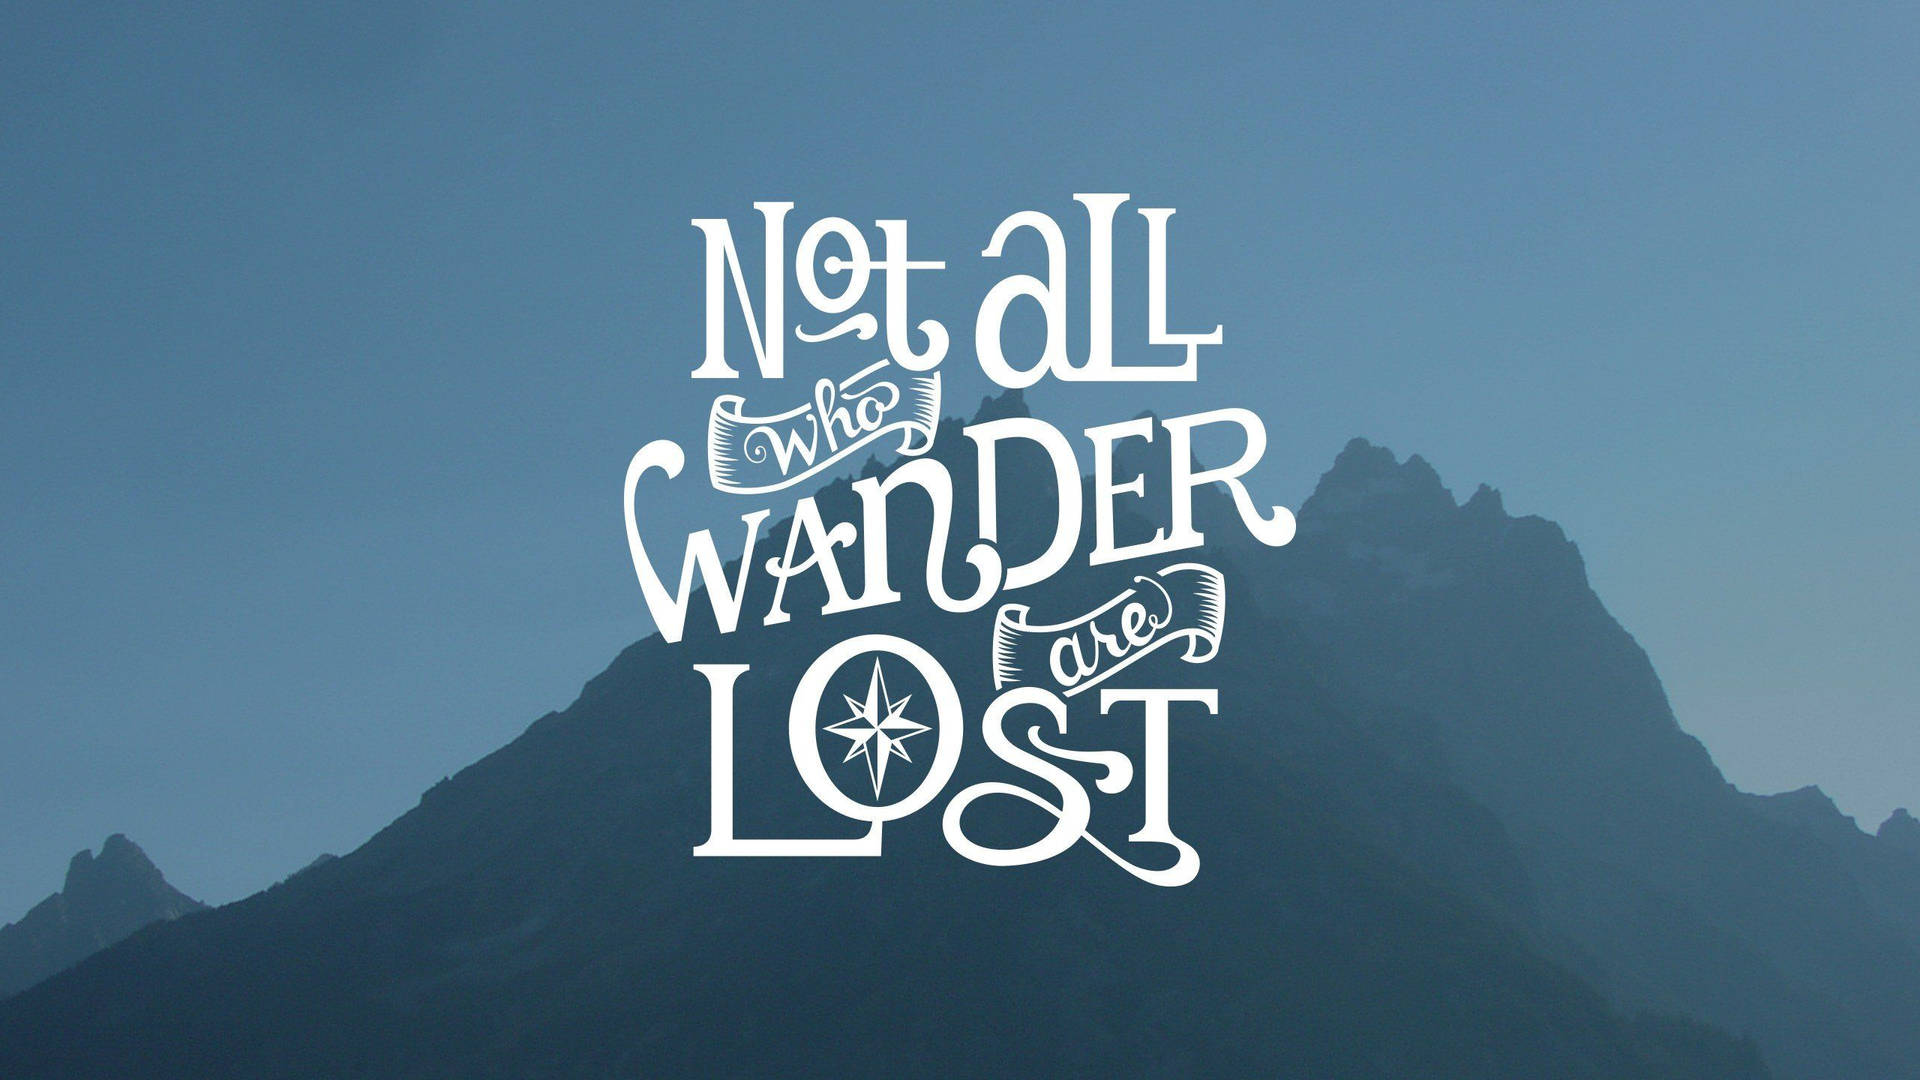 Wander And Lost Quotes Desktop Wallpaper